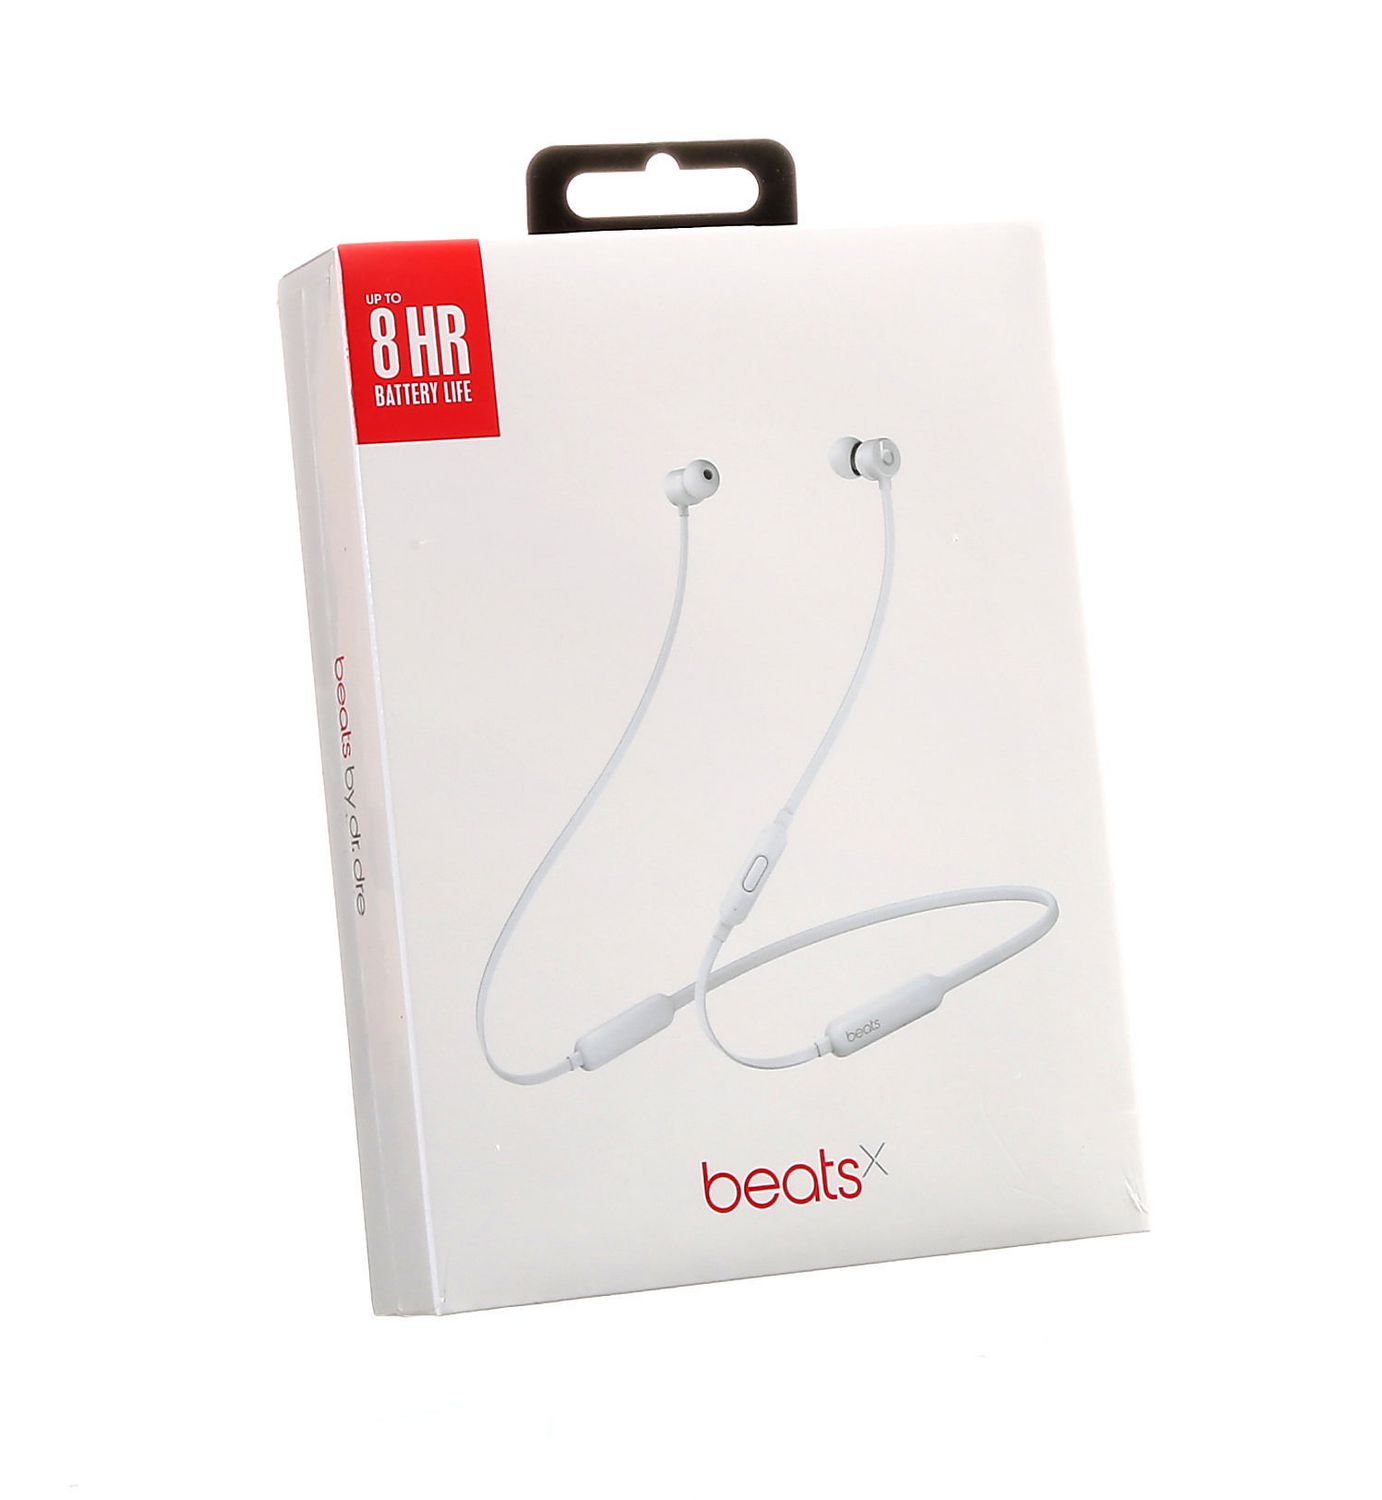 beatsx wireless earphones